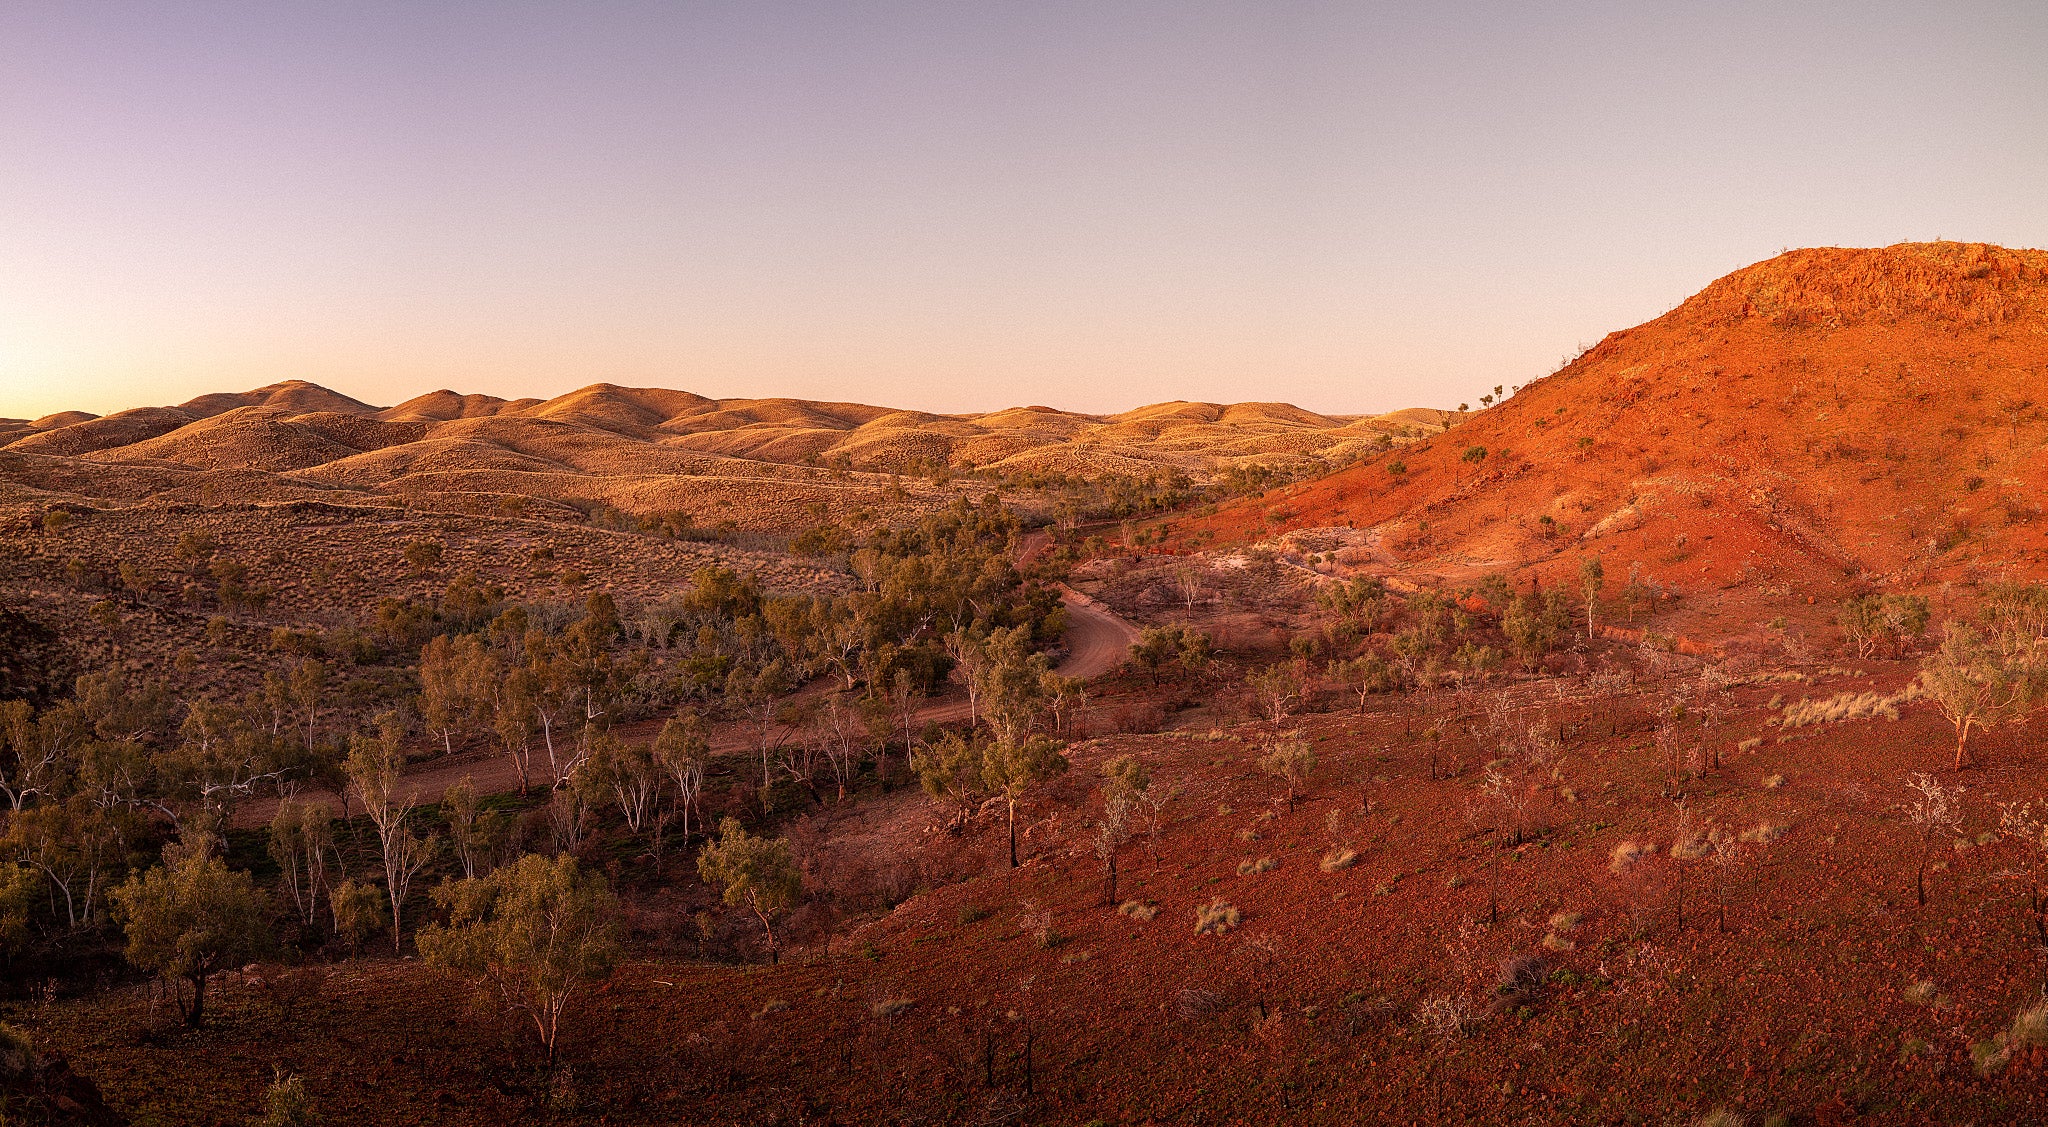 Photograph of Coppins Gap near Marble Bar in the pilbara region of western australia.